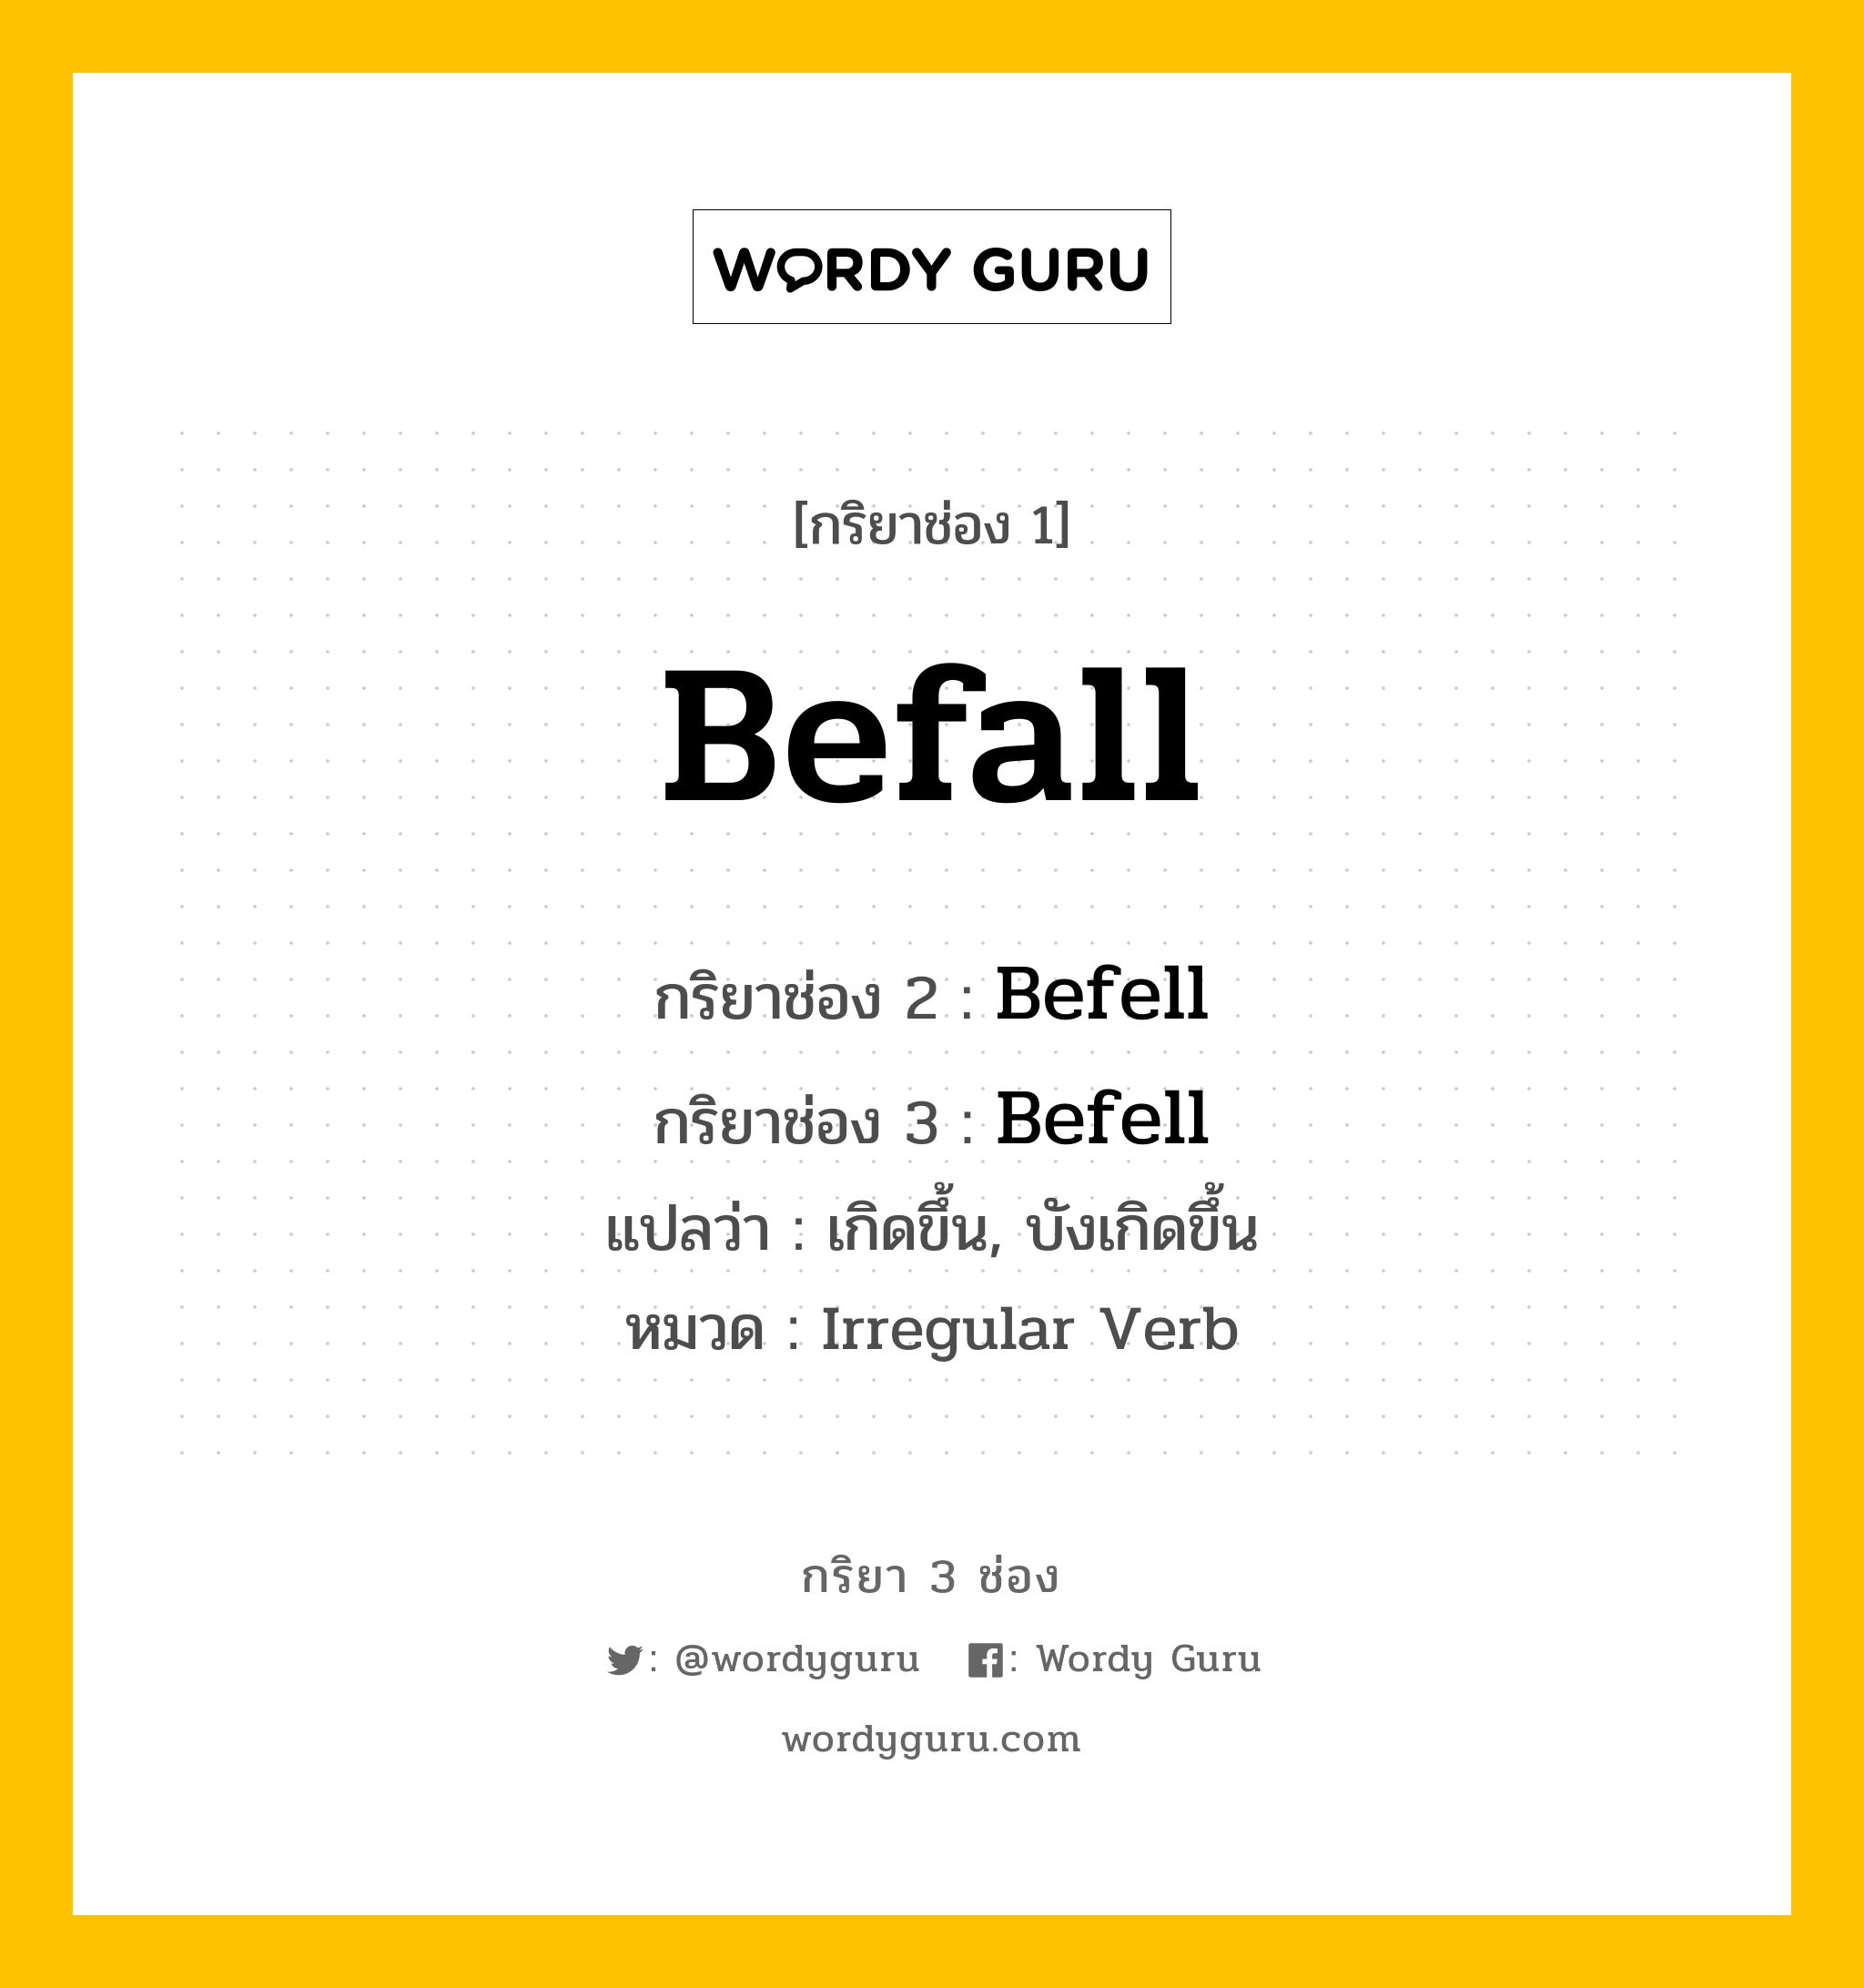 Befall มีกริยา 3 ช่องอะไรบ้าง? คำศัพท์ในกลุ่มประเภท Irregular Verb, กริยาช่อง 1 Befall กริยาช่อง 2 Befell กริยาช่อง 3 Befell แปลว่า เกิดขึ้น, บังเกิดขึ้น หมวด Irregular Verb หมวด Irregular Verb